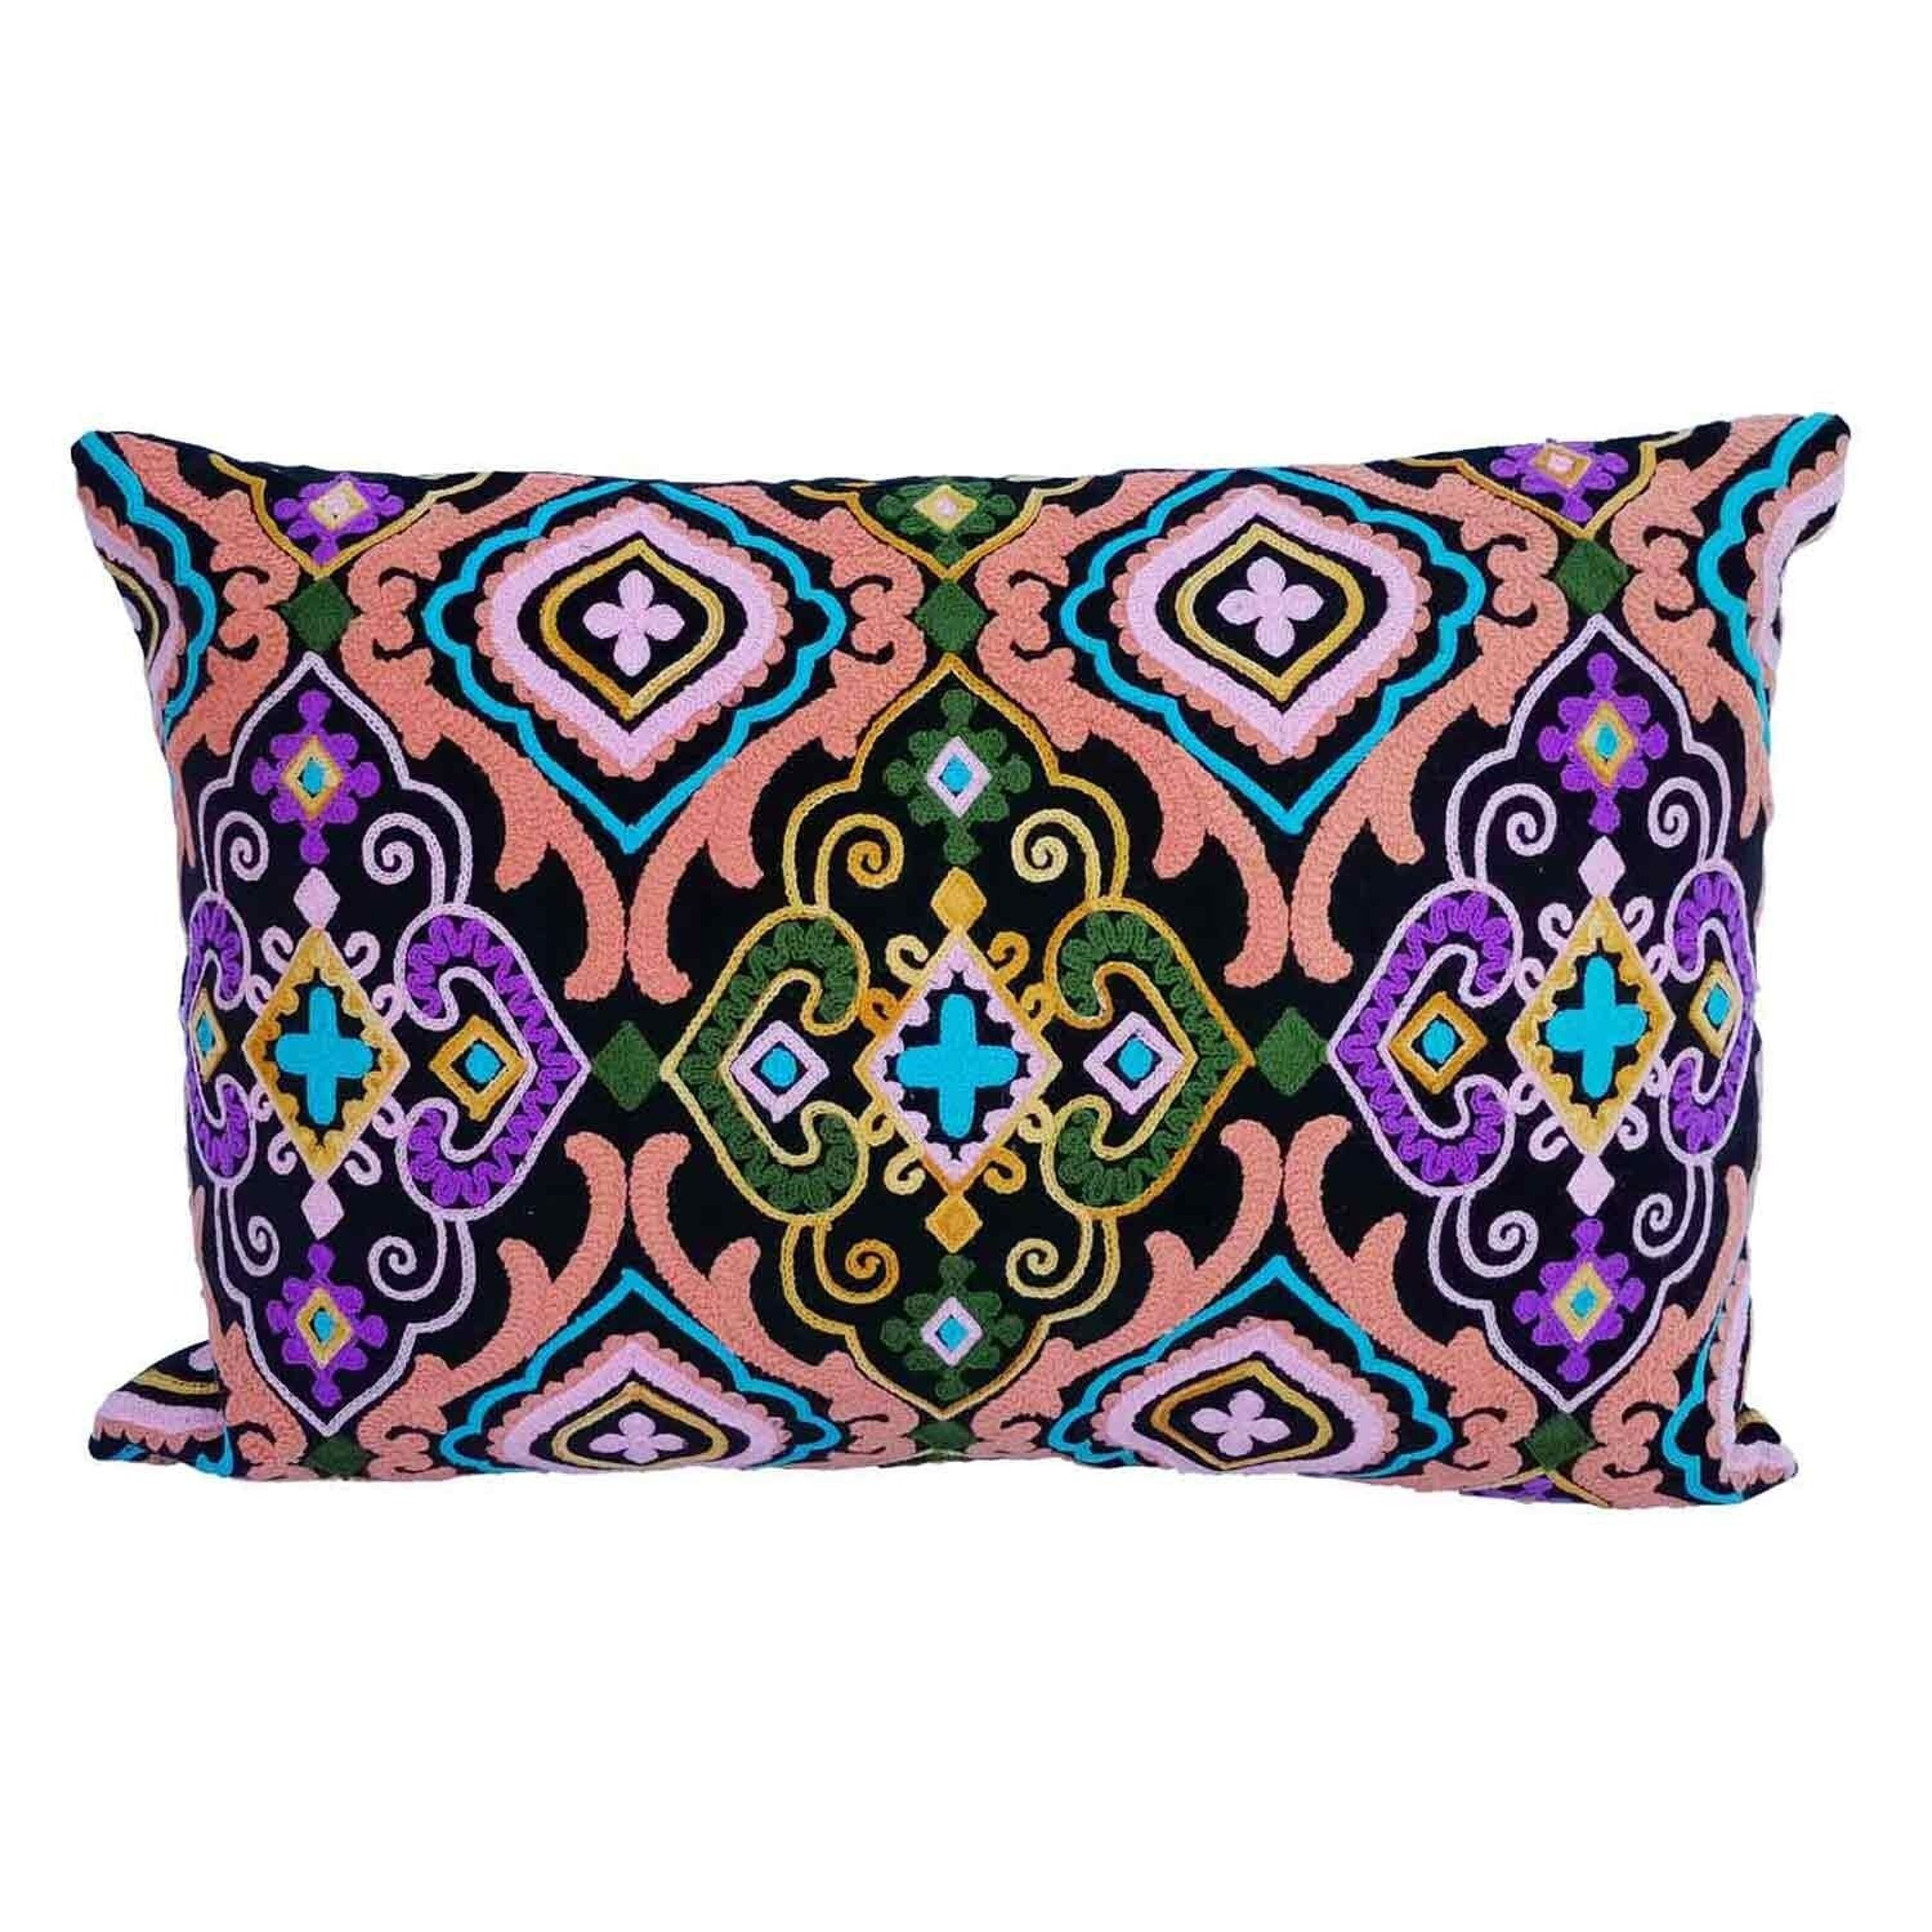 Lola | Embroidered | Hippie wholesale 48x30cm pillow Mandala velvet Black filling Cushion Buy with